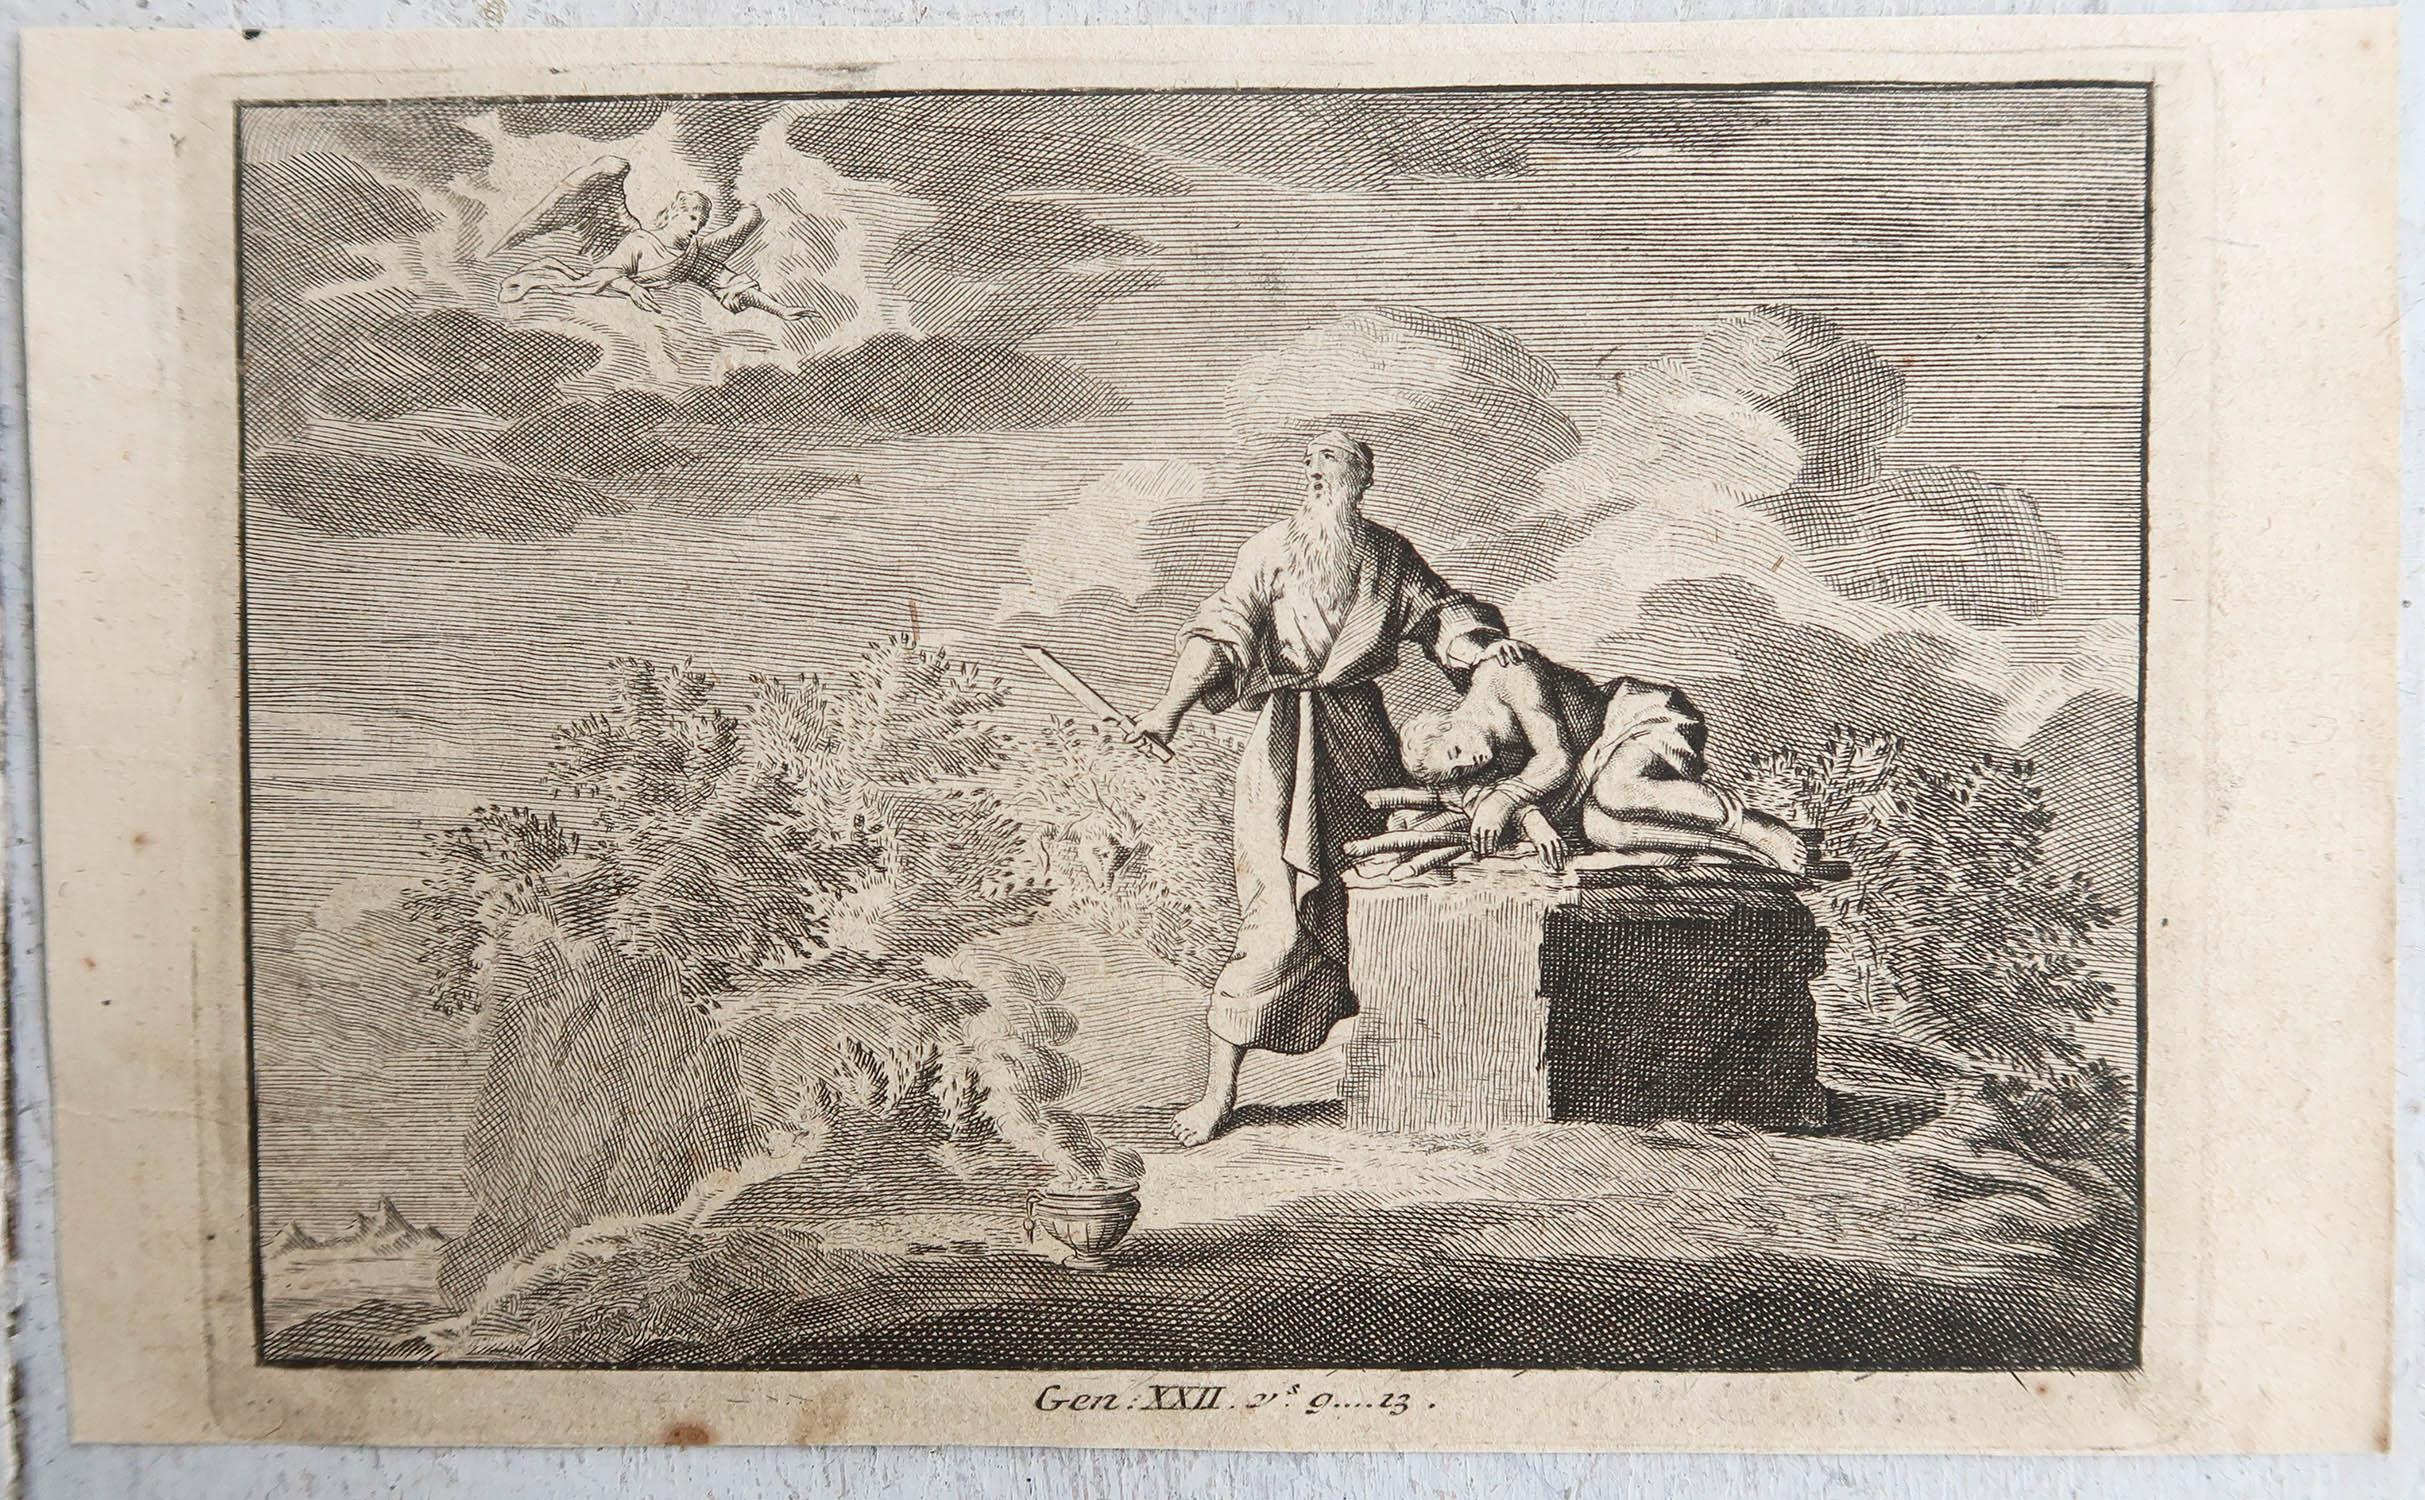 Dutch Original Antique Print After Jan Luyken, Amsterdam, Genesis XXII. 1724 For Sale